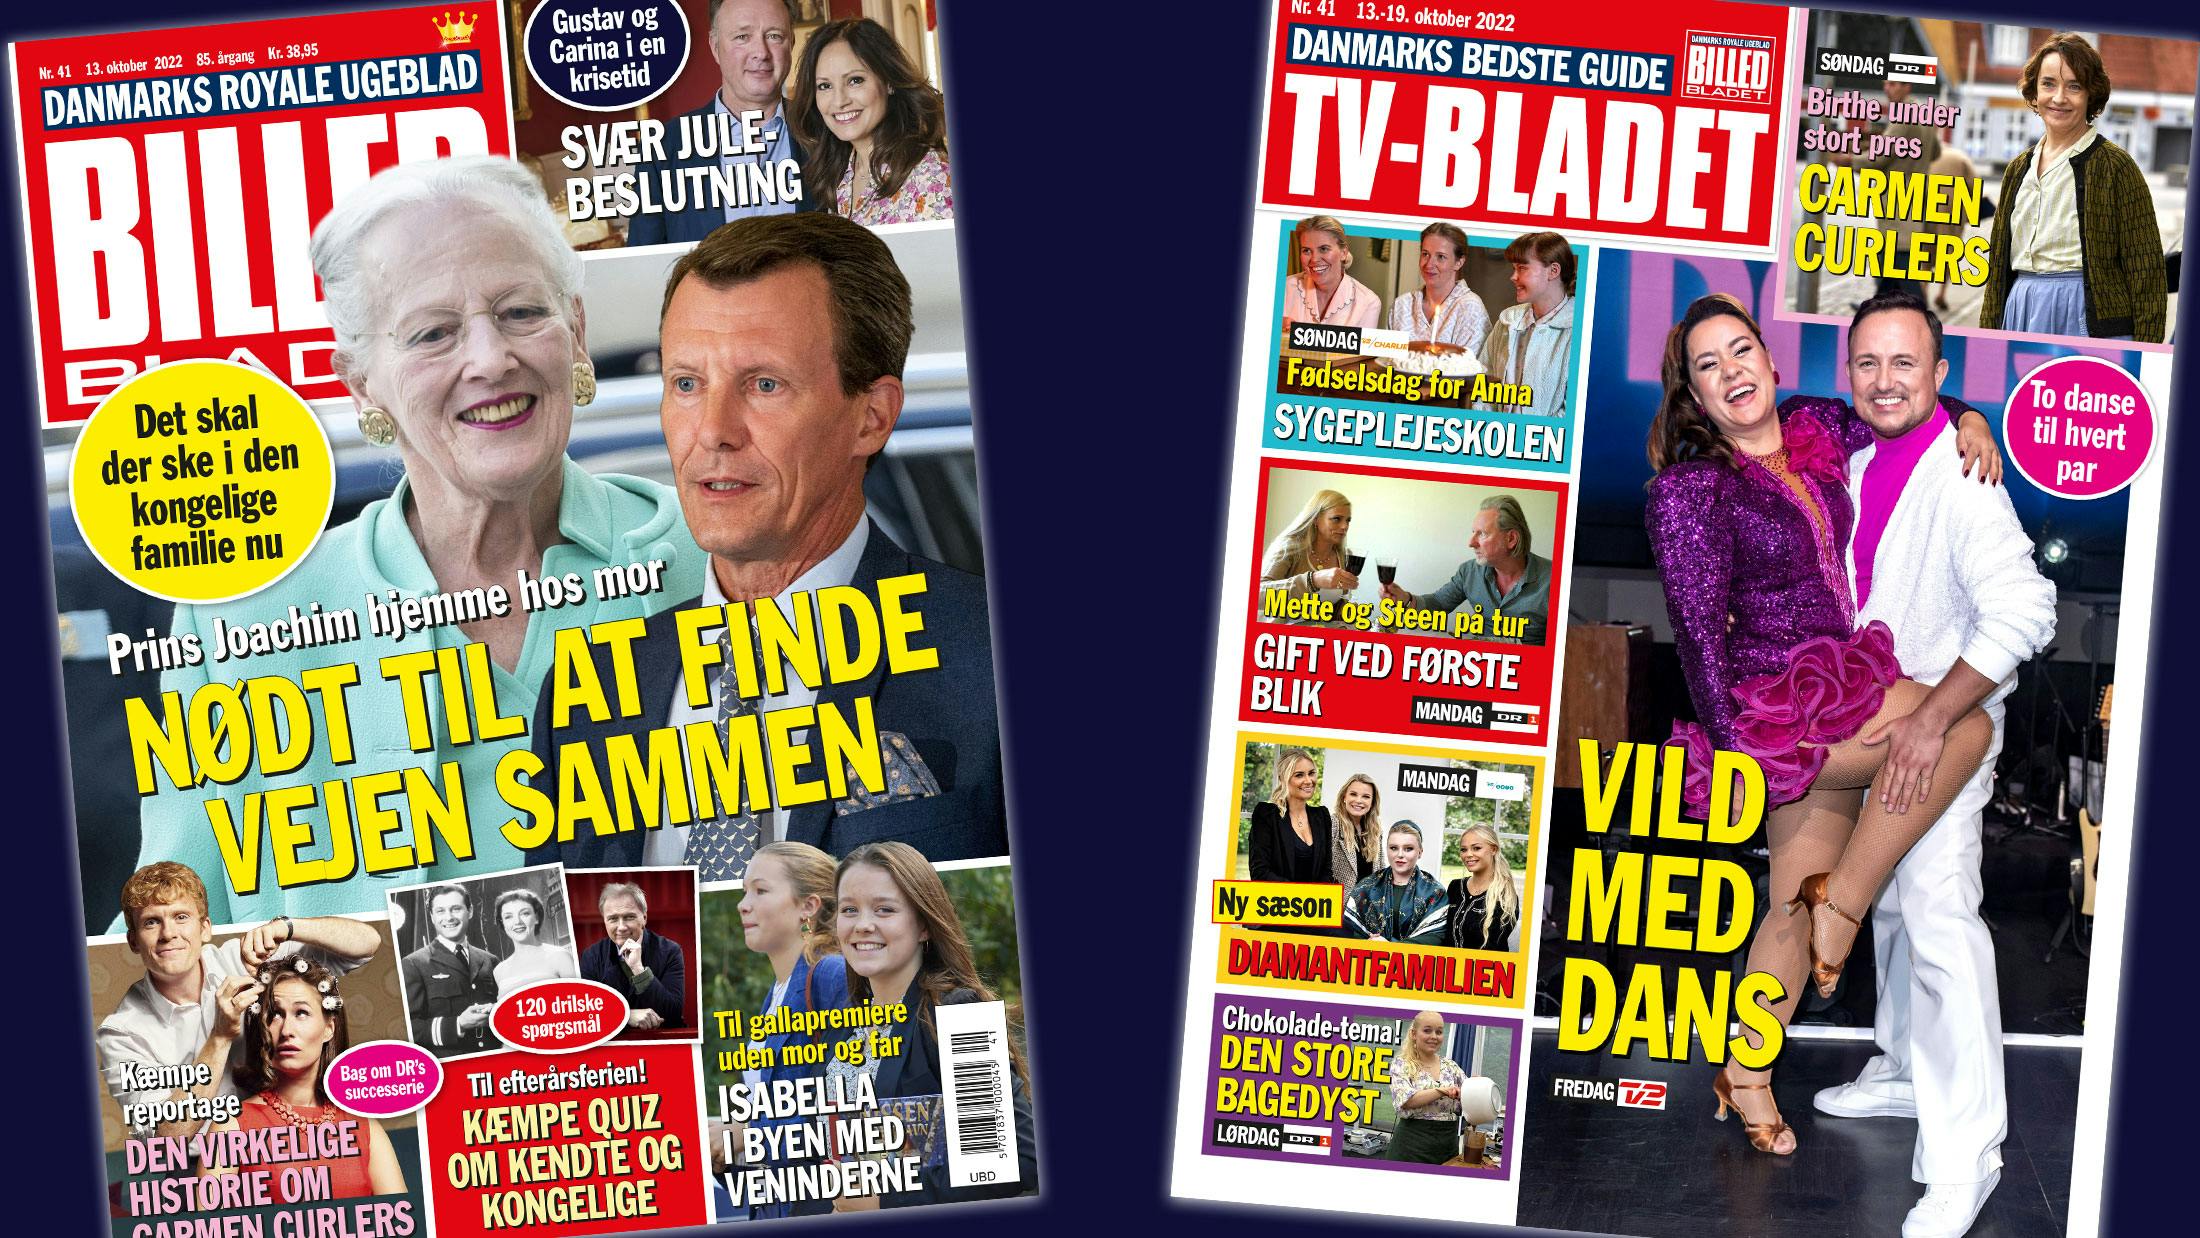 https://imgix.billedbladet.dk/media/article/webgrafik_bb41-forsider_1.jpg